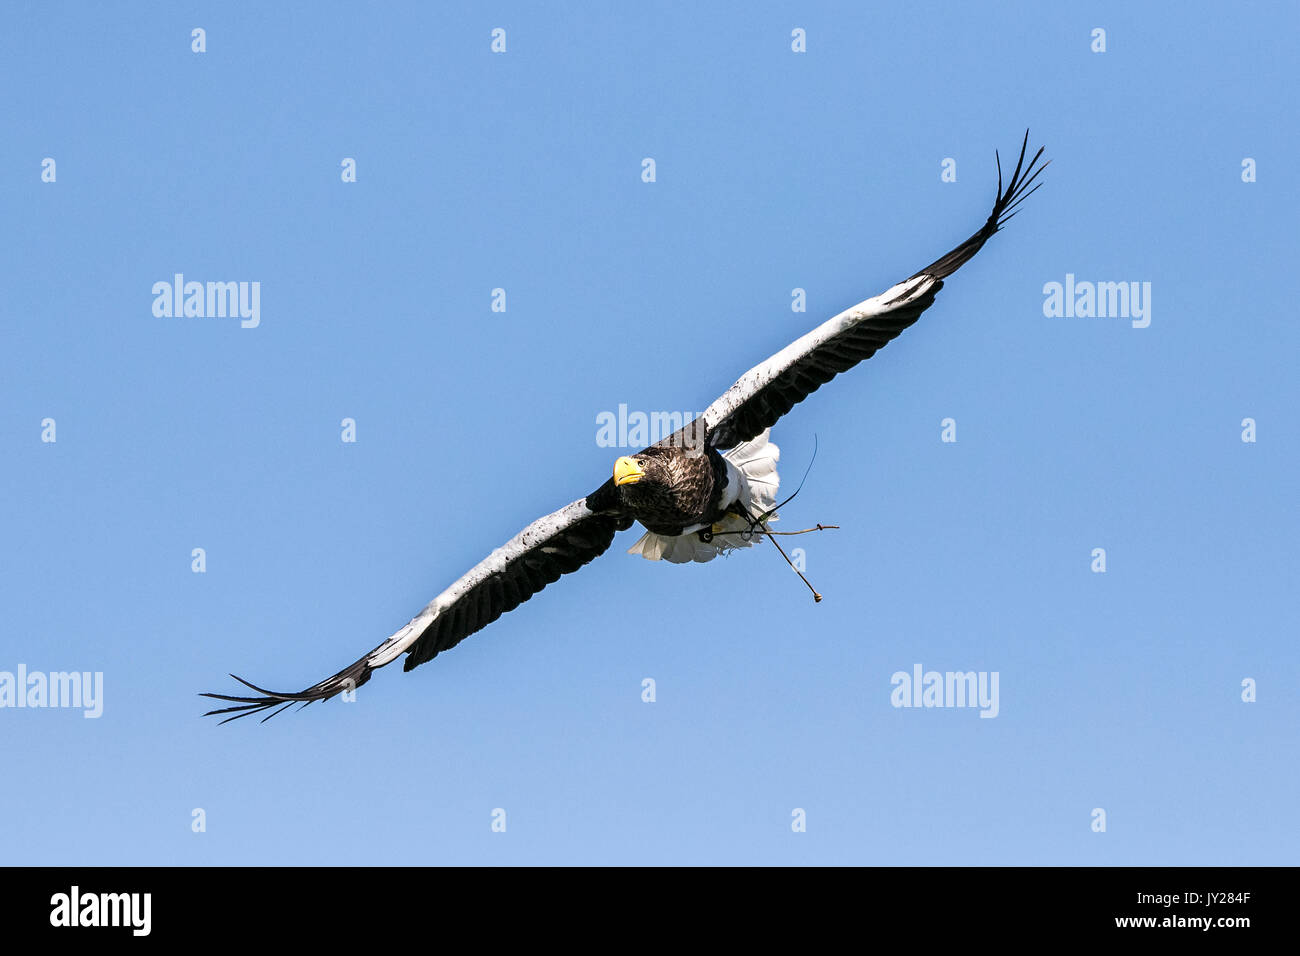 A white-tailed sea eagle in full flight Stock Photo